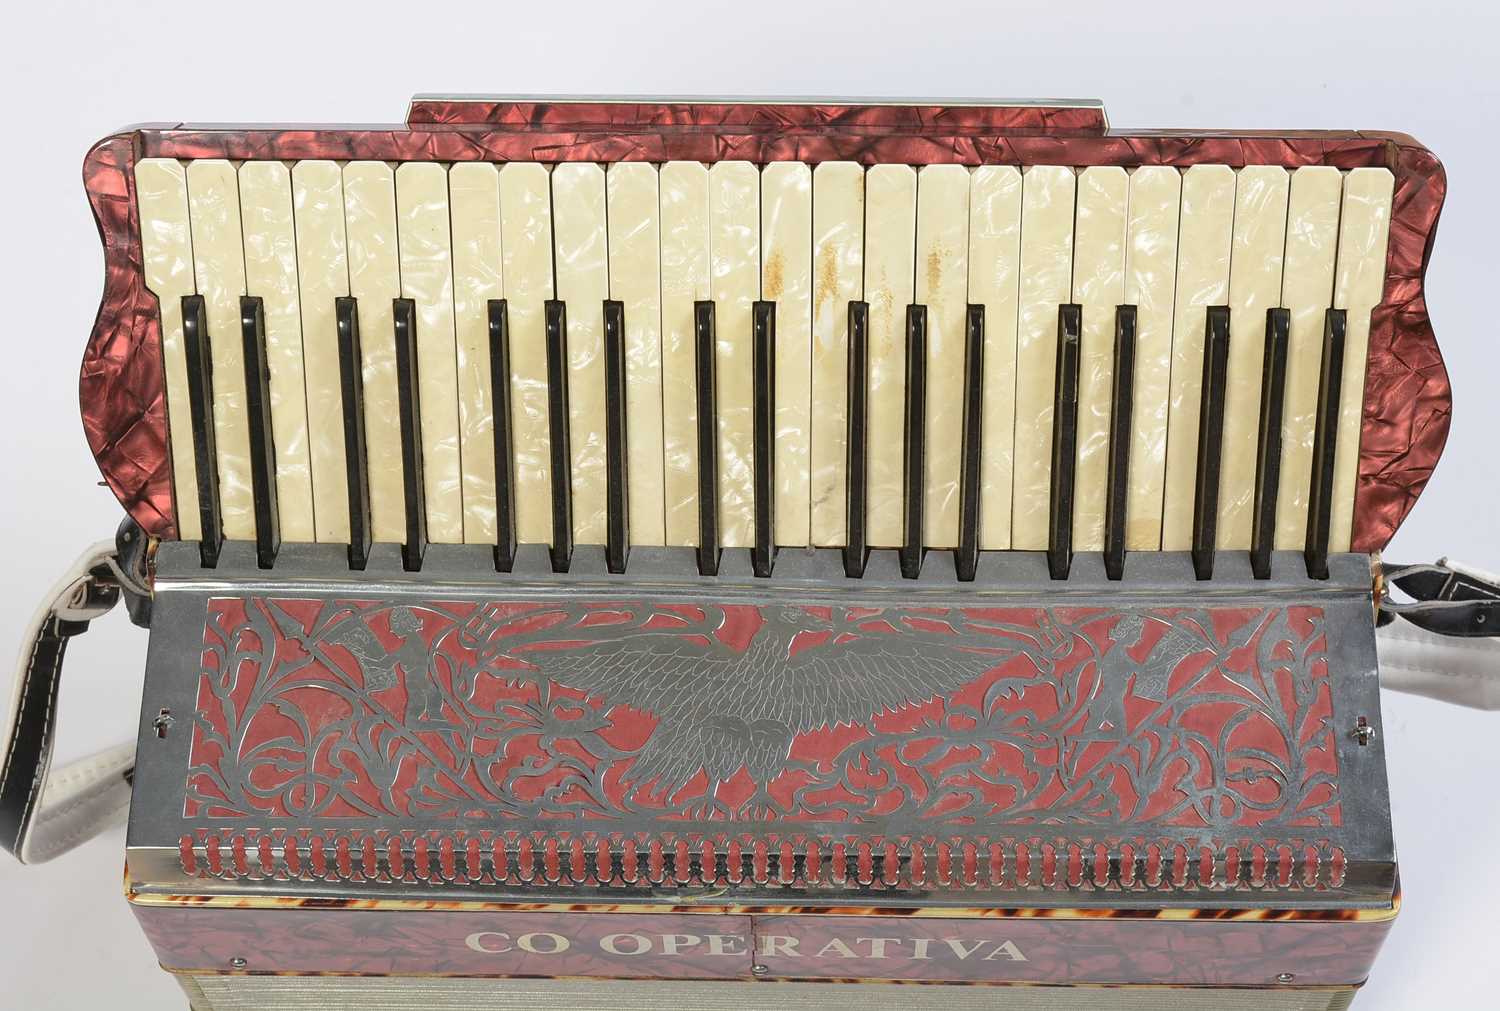 Co-Operitiva piano accordion - Image 2 of 6